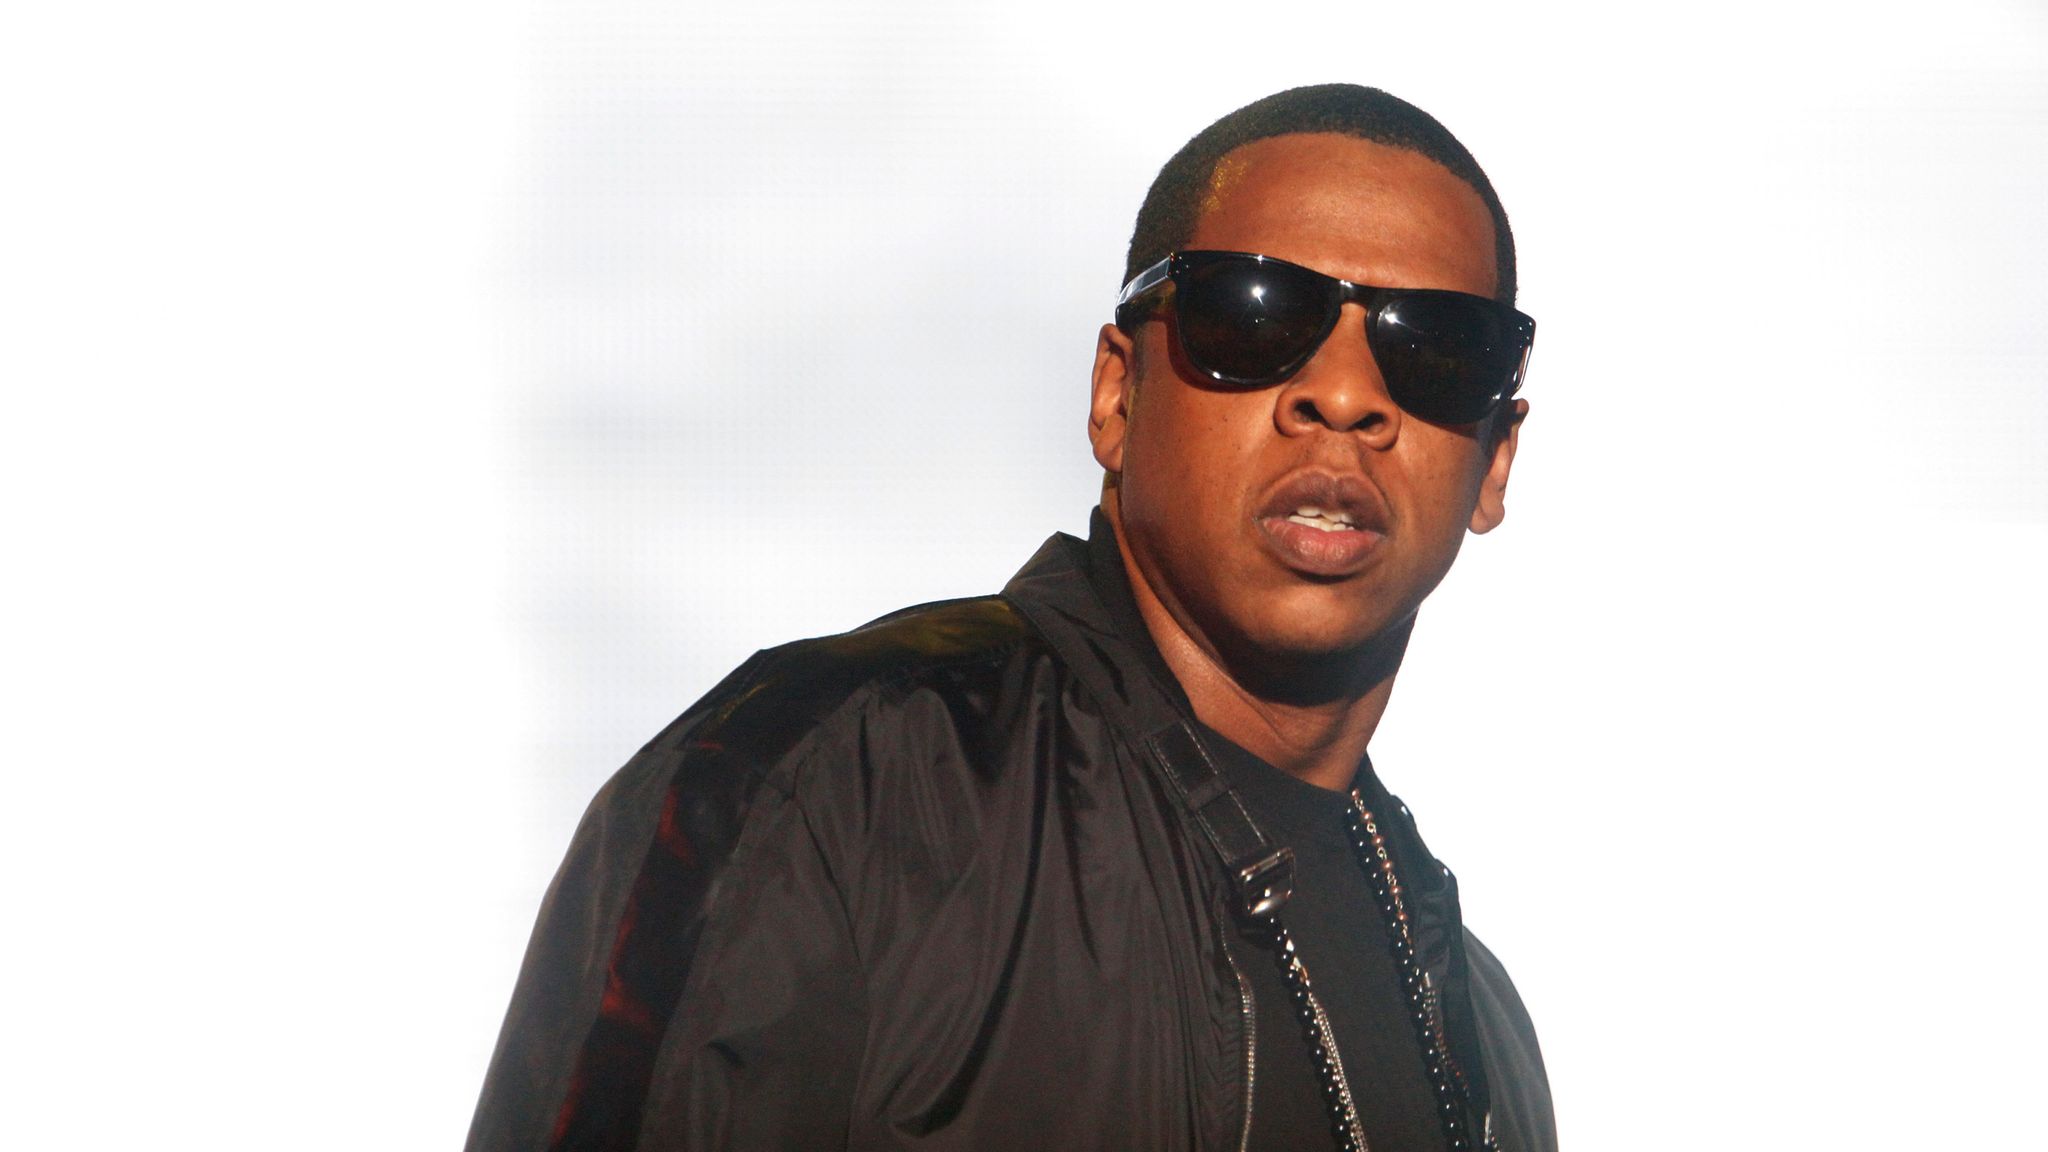 U.S. regulator orders Jay-Z to testify on sale of clothing brand